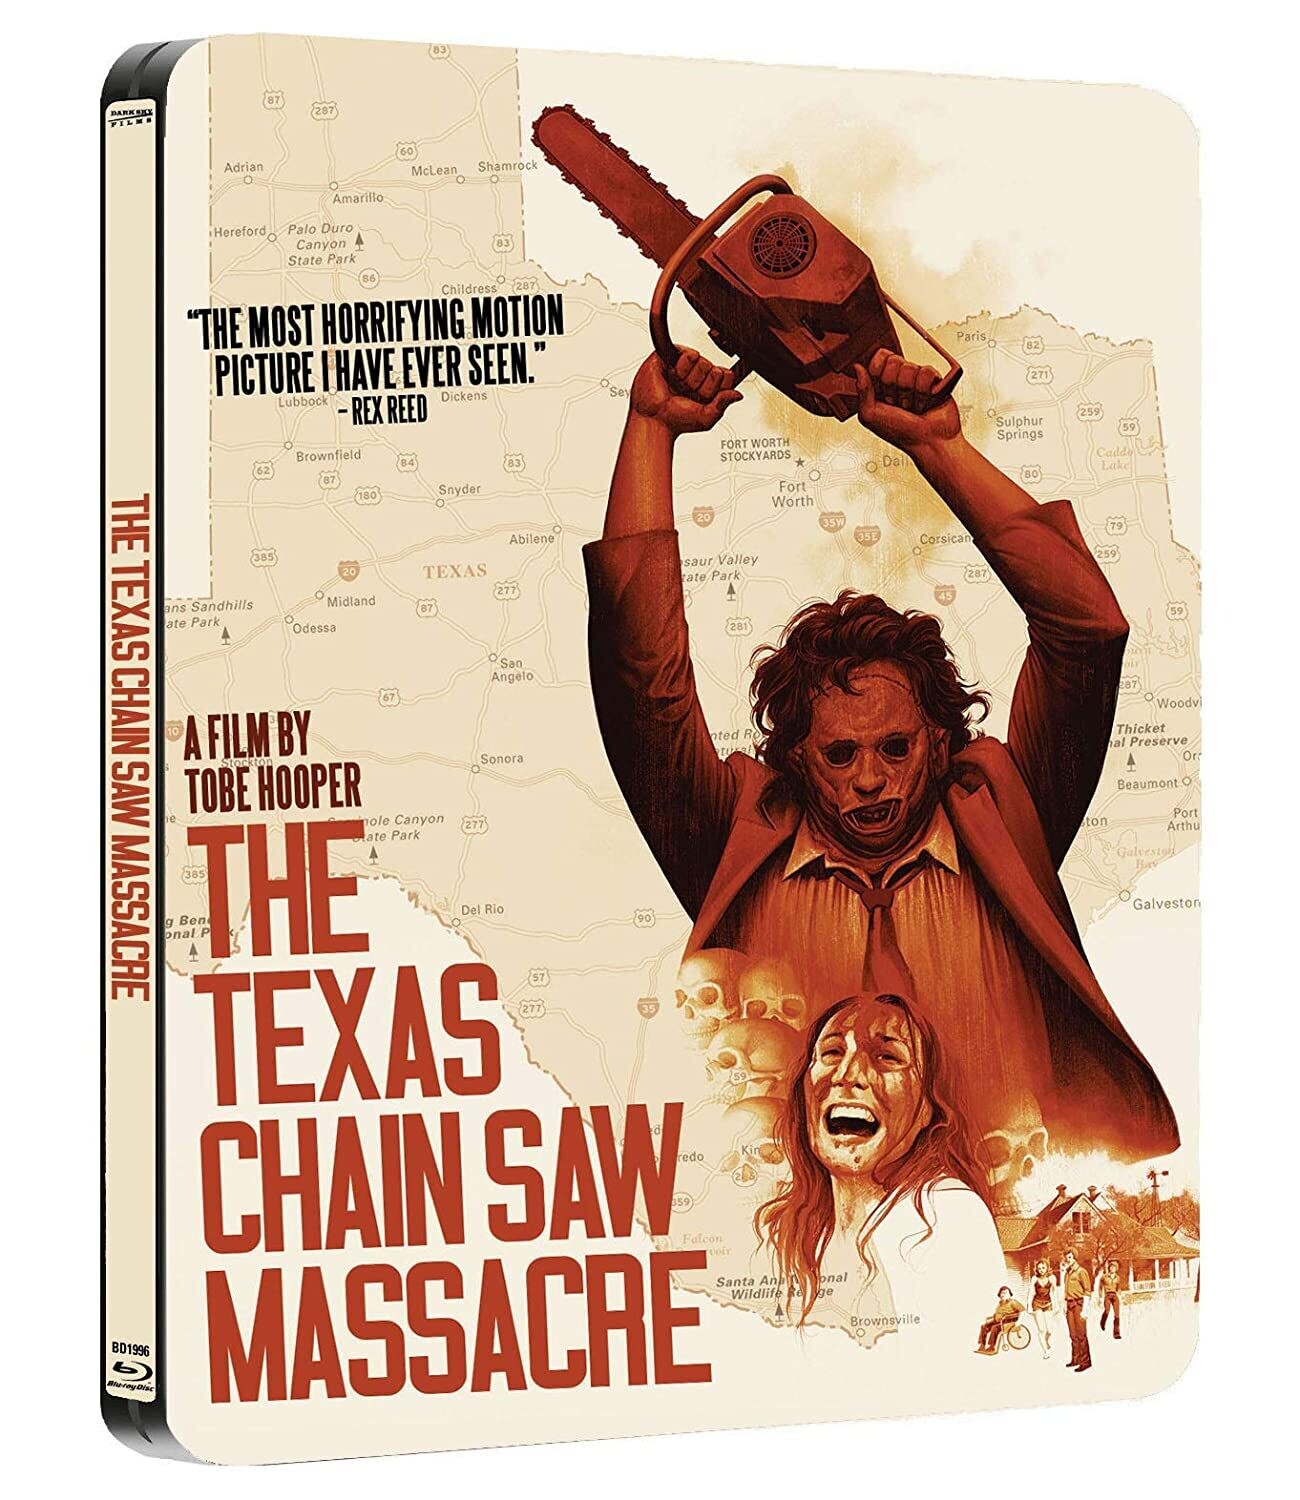 Texas Chainsaw Massacre (1974) Blu-ray Steelbook [Limited Edition]